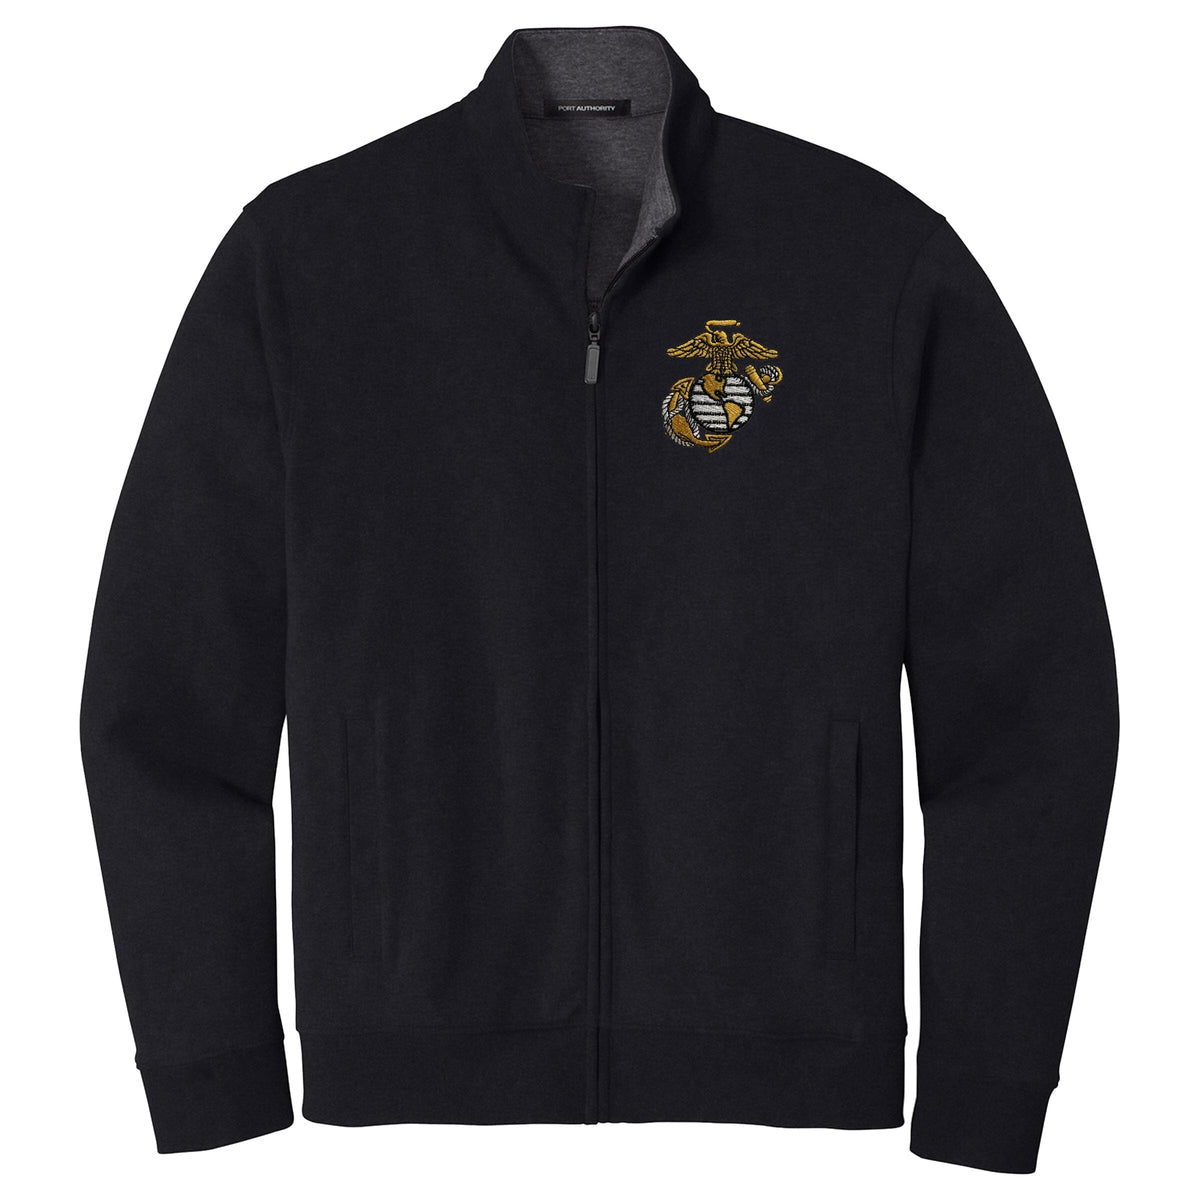 Big EGA Embroidered Black/Heather Interlock Full-Zip Jacket